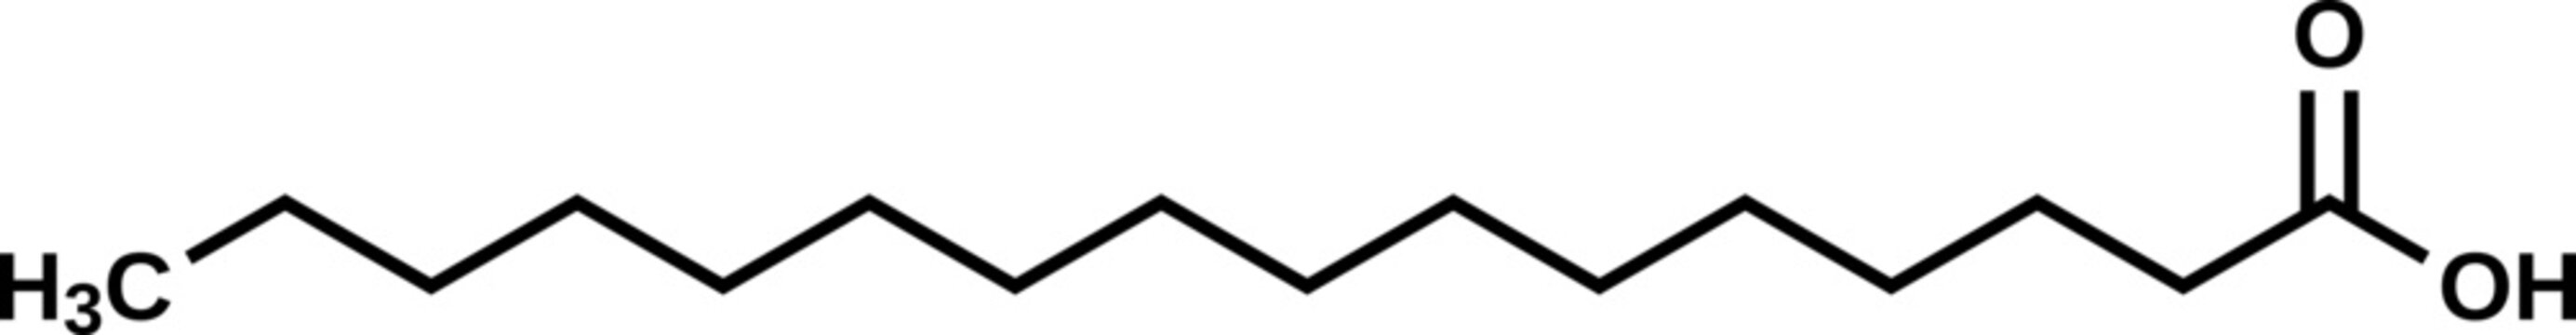 Palmitic acid C15H31COOH structural formula, vector illustration